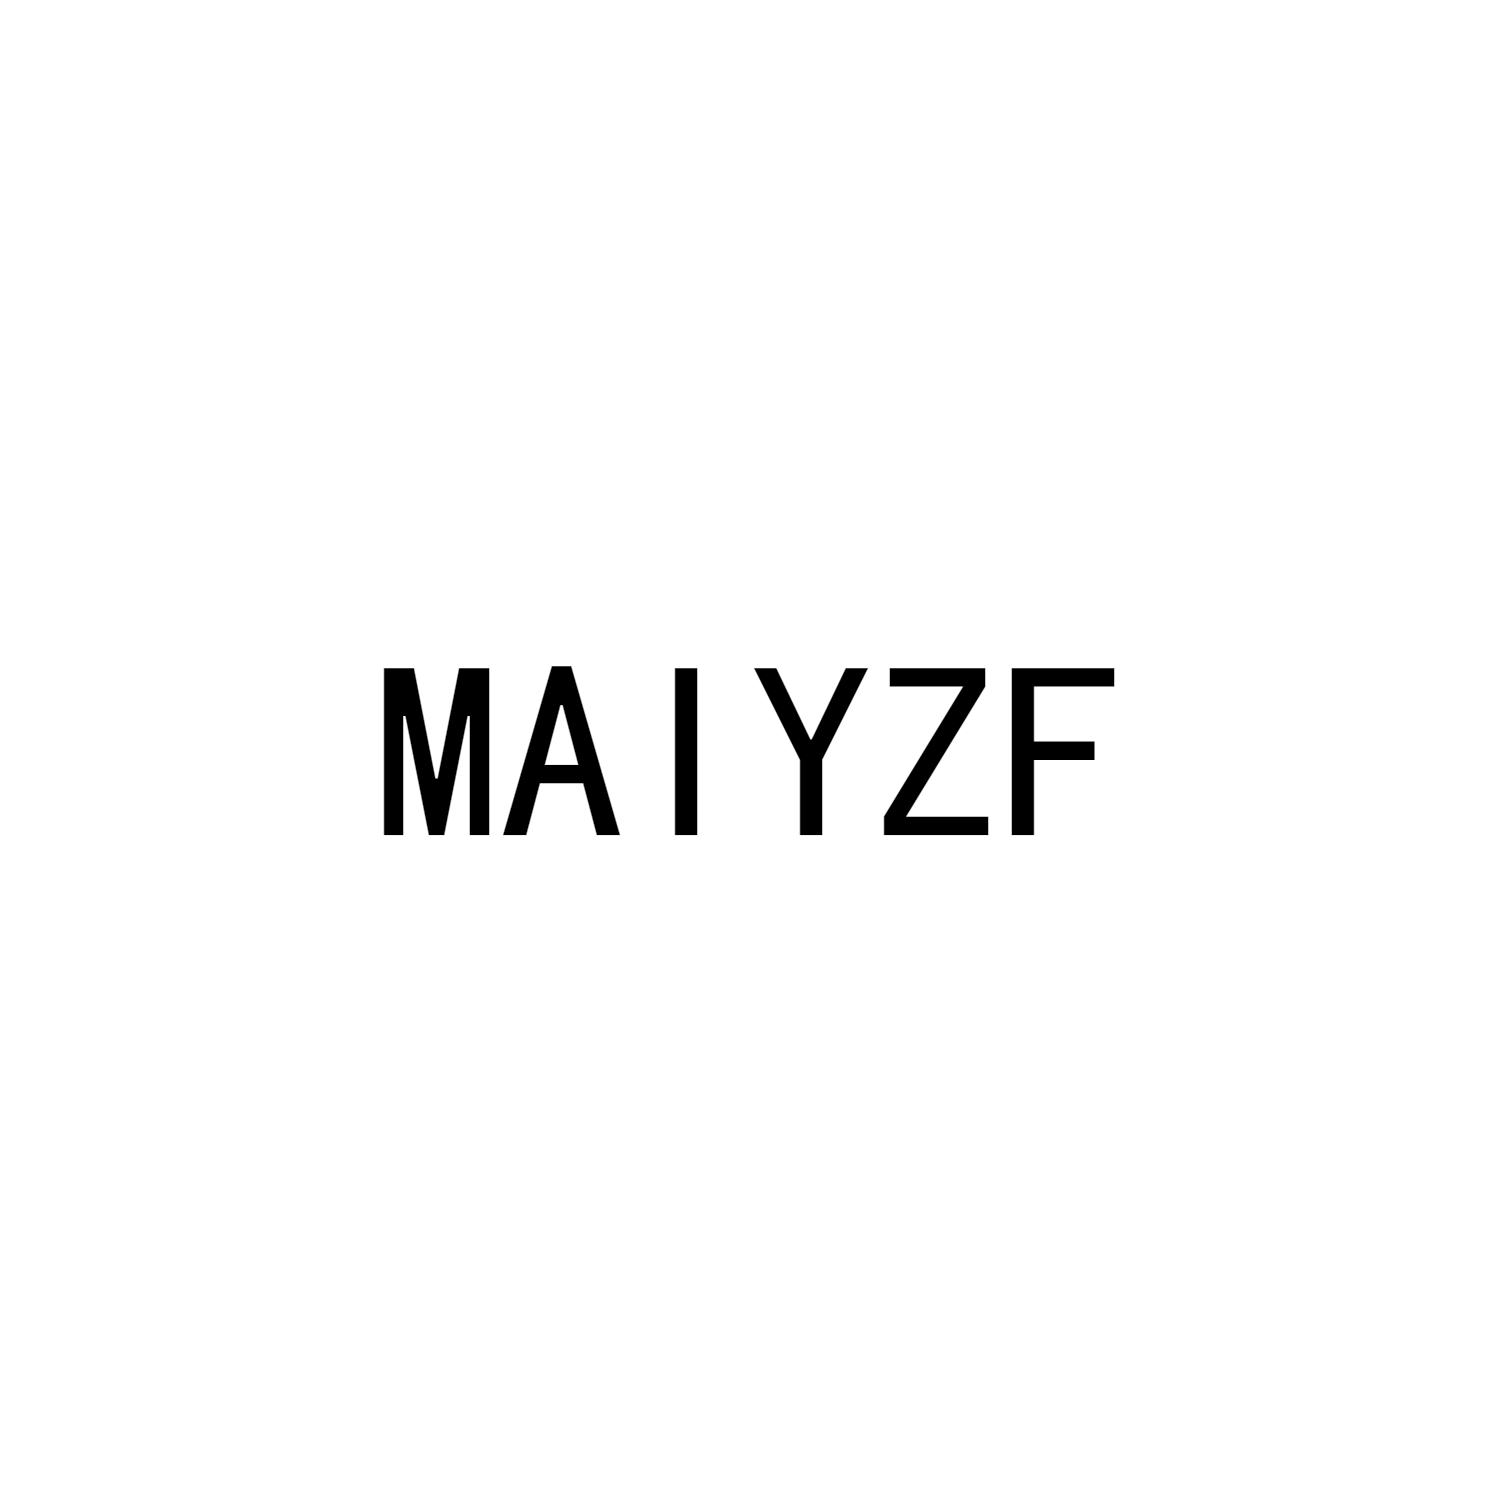 MAIYZF